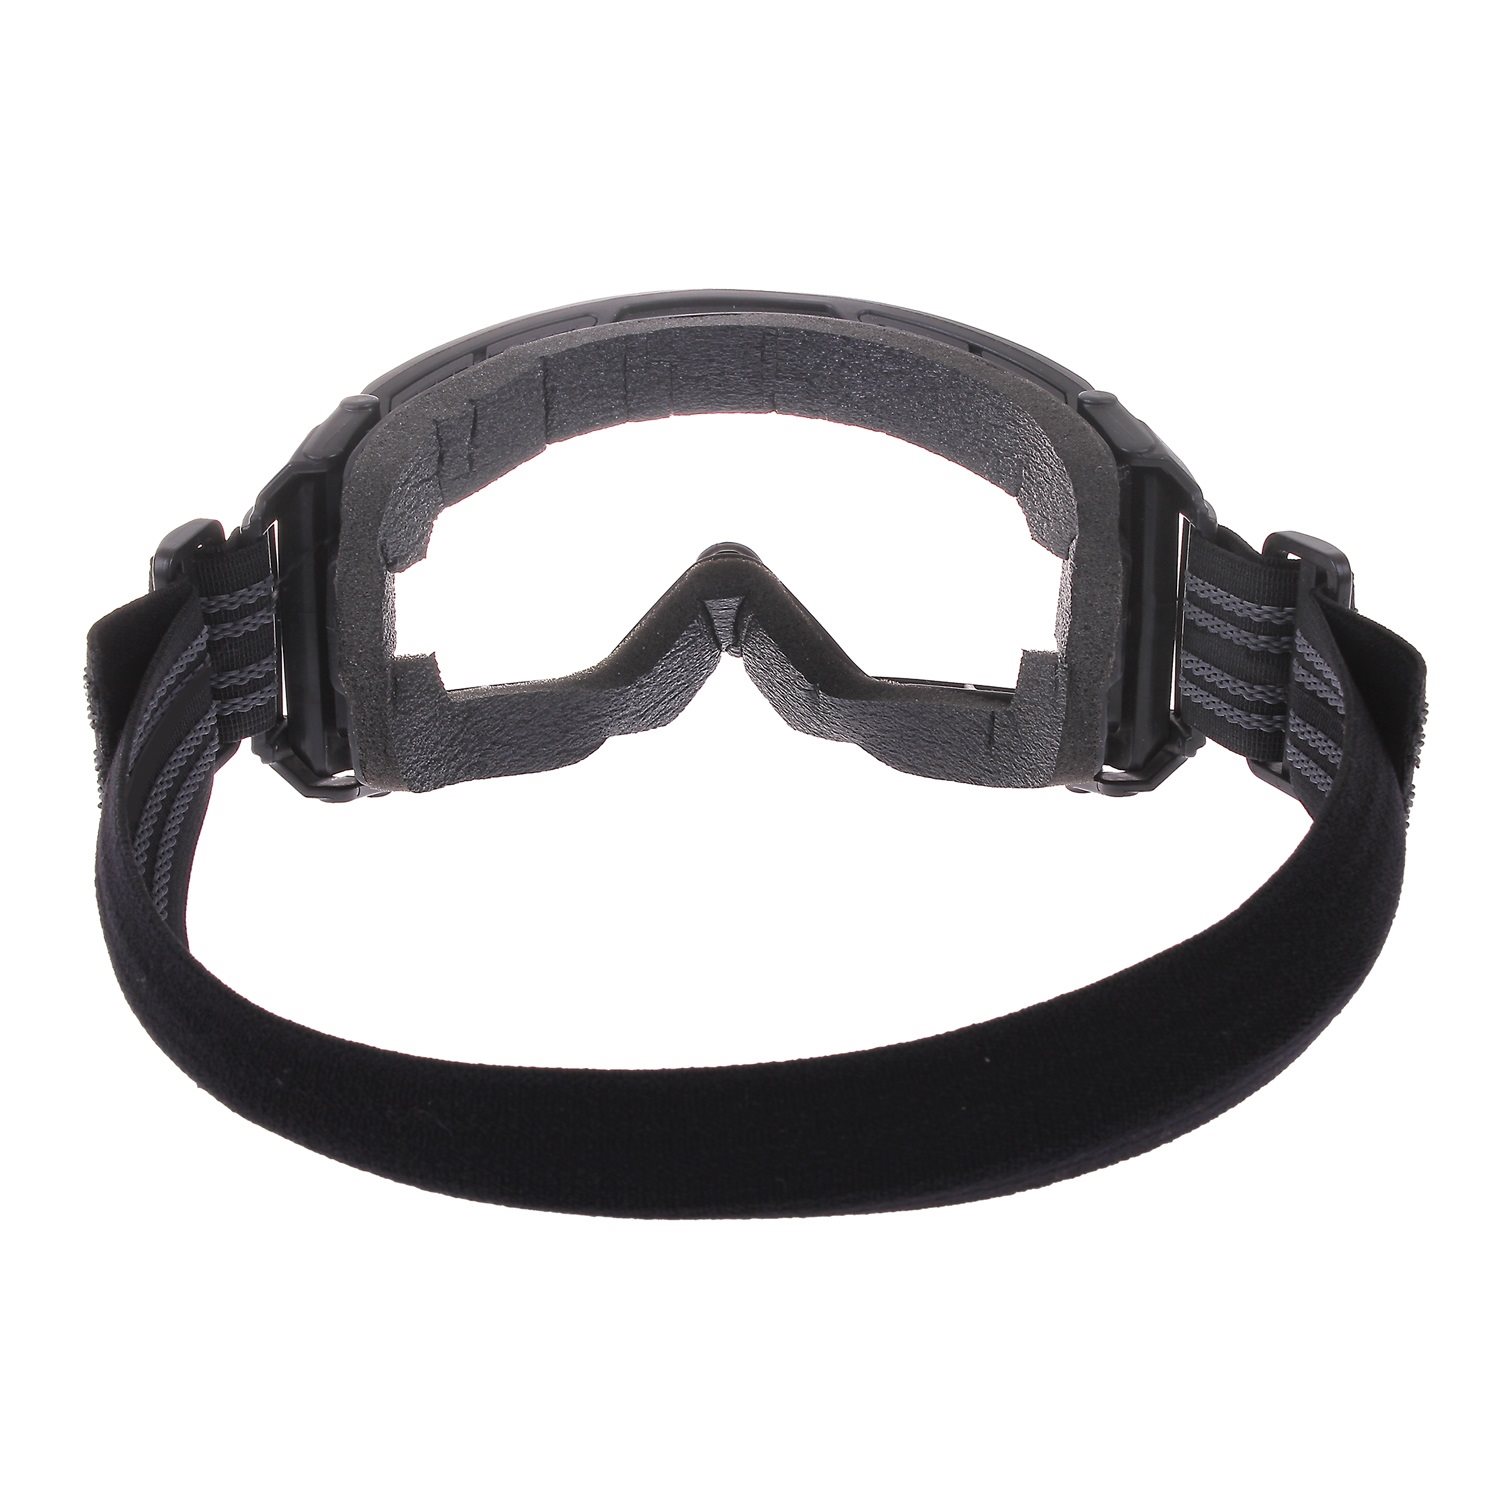 Rothco Black VenTec ANSI Rated Safety Shooting Goggles 